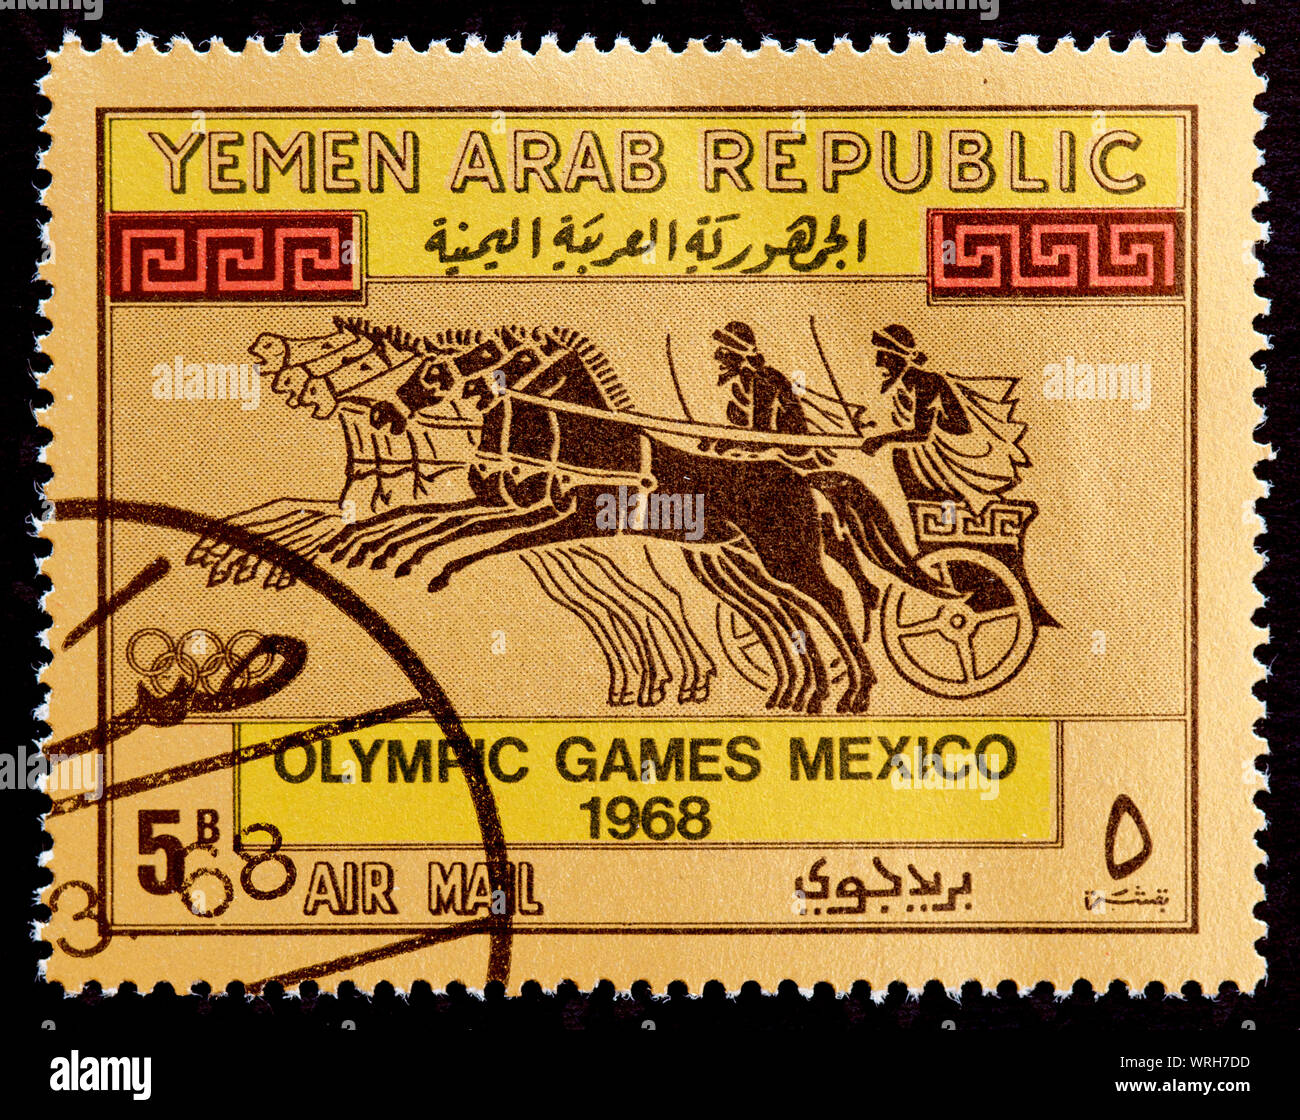 Yemen Arab Republic Postage Stamp - Summer Olympics 1968, Mexico City Stock Photo